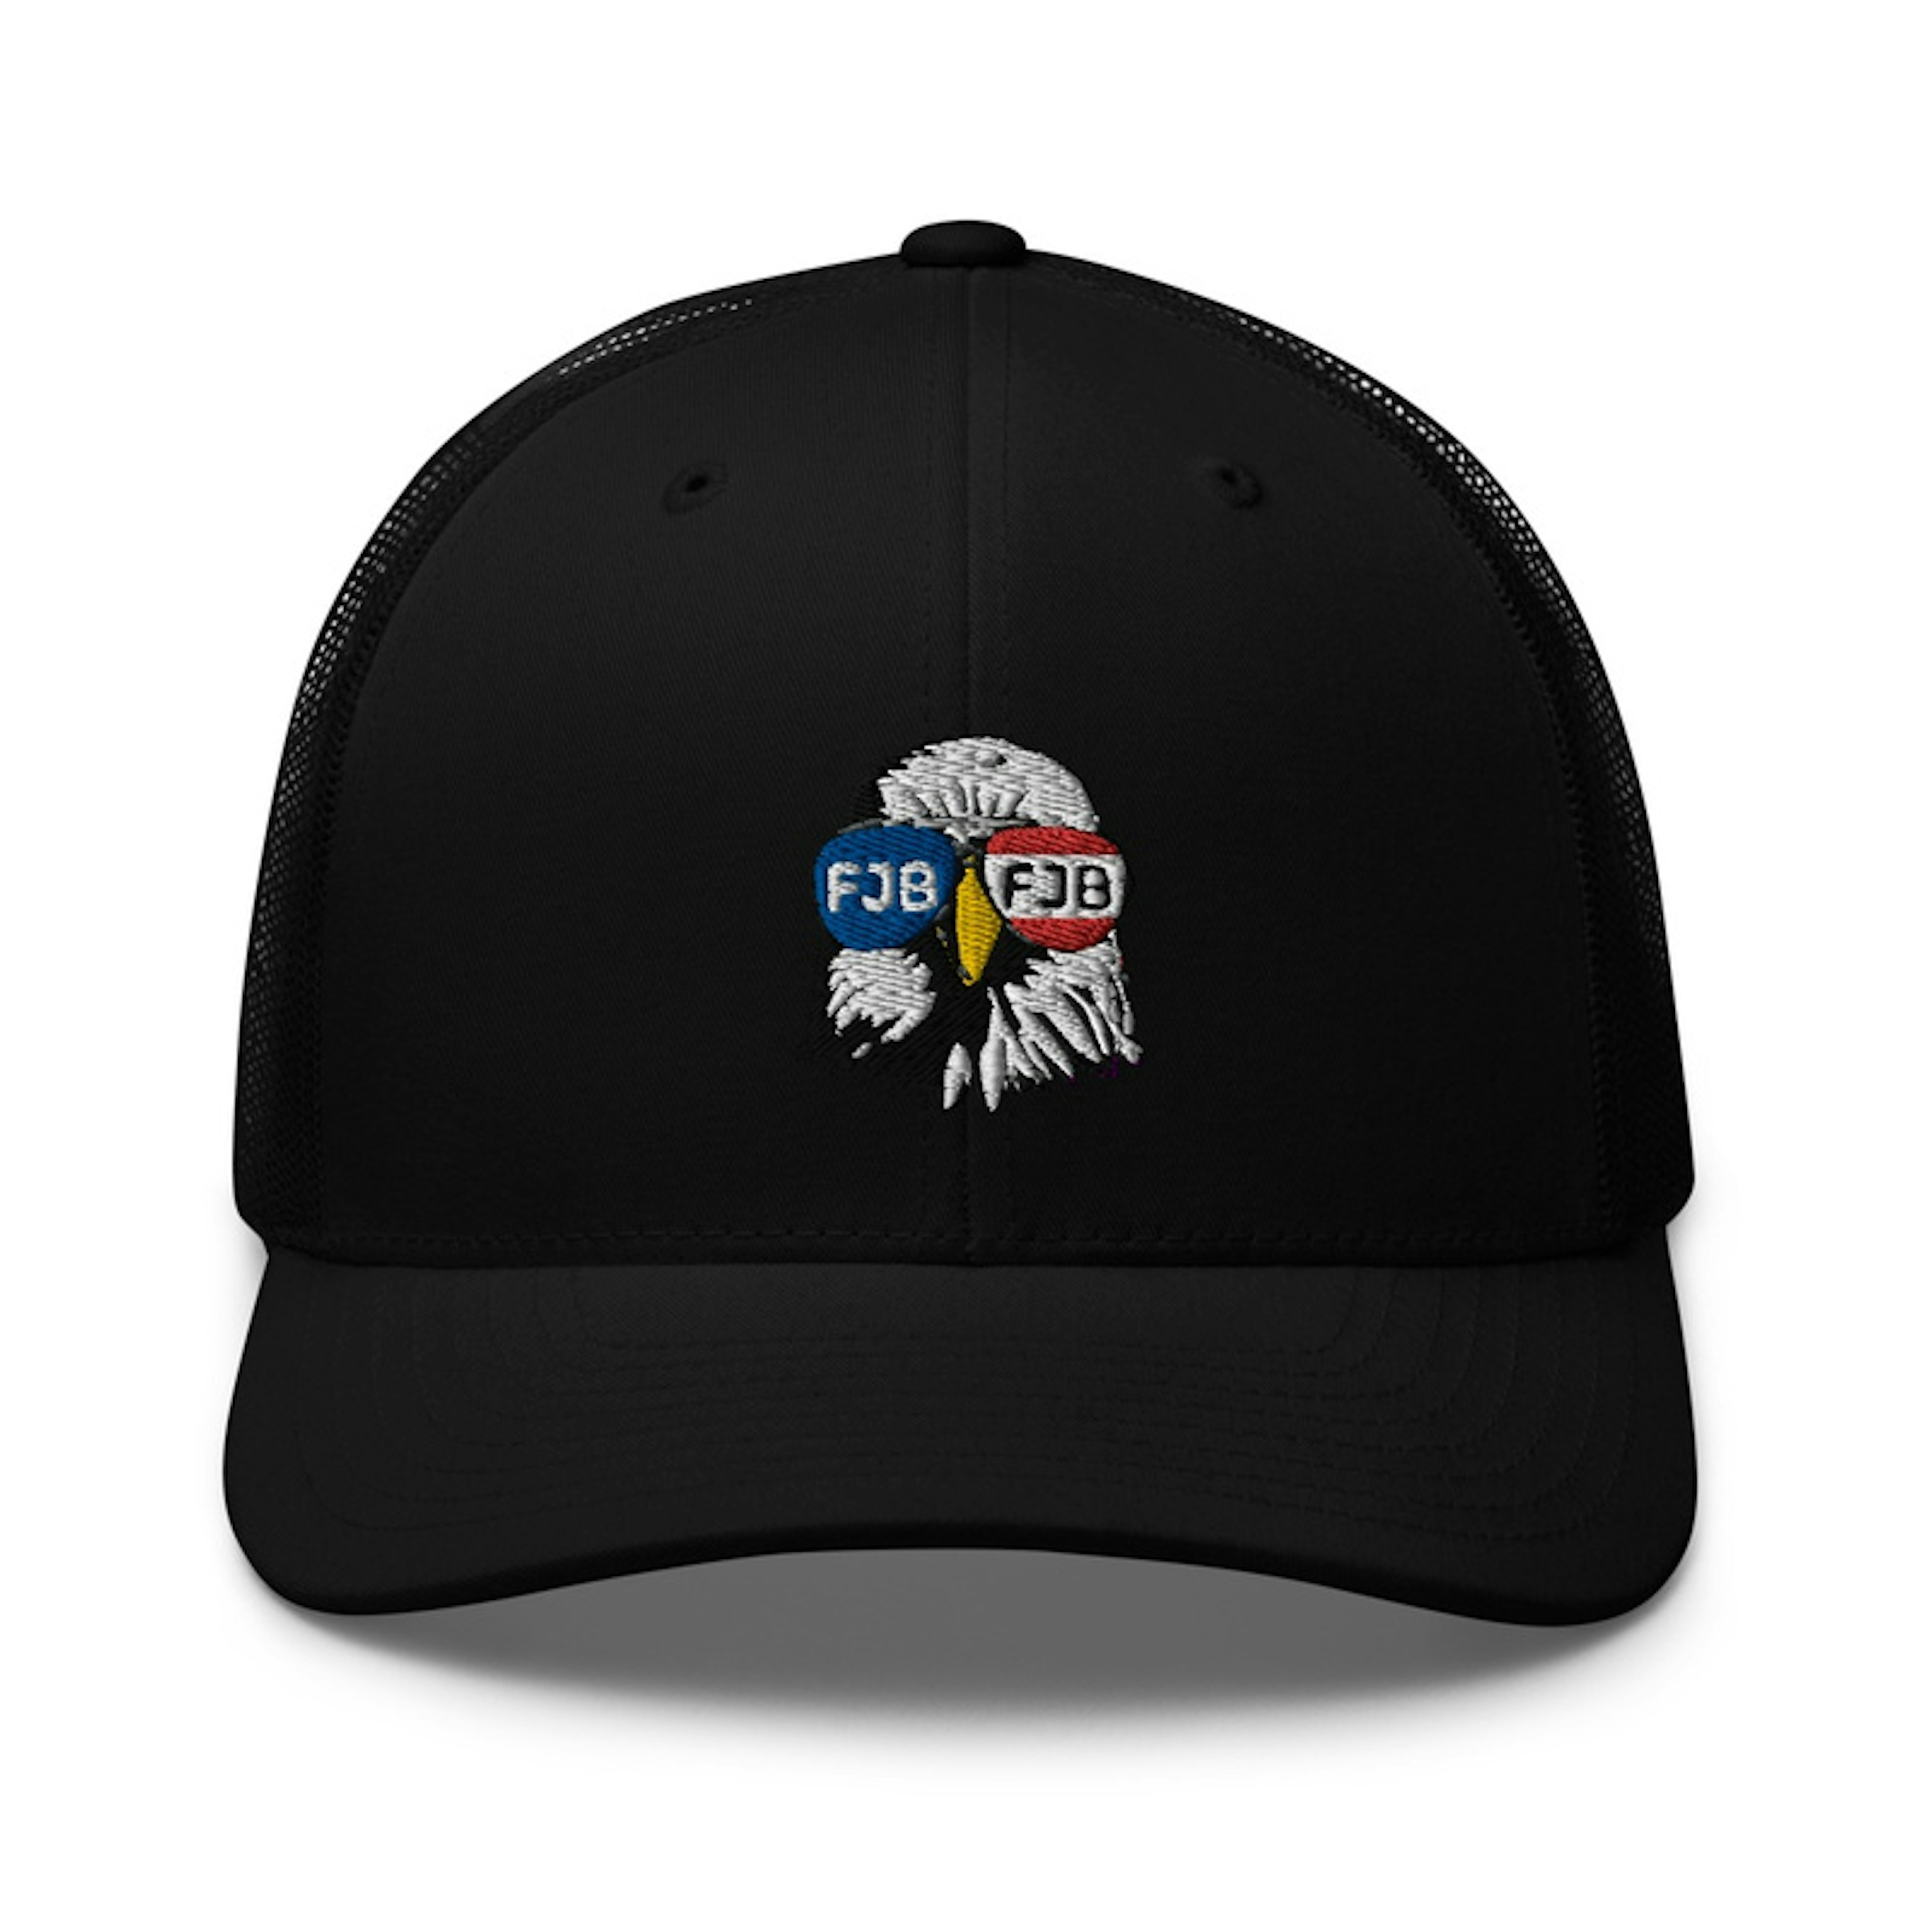 $FJB Eagle Trucker Hat